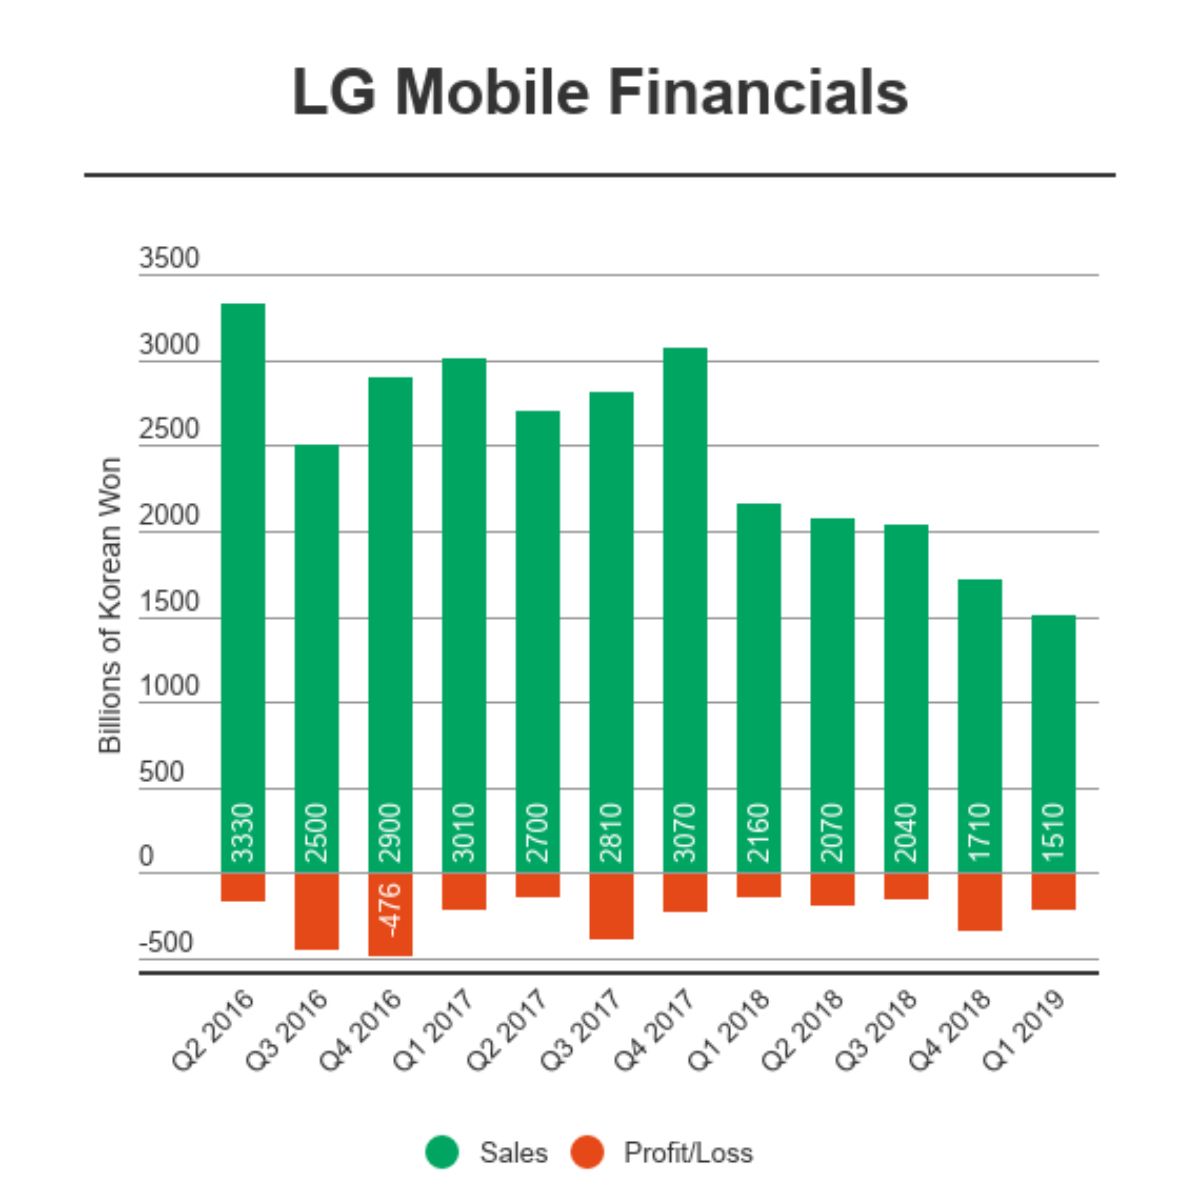 Laporan keuangan kuartal 1 2019 LG Mobile